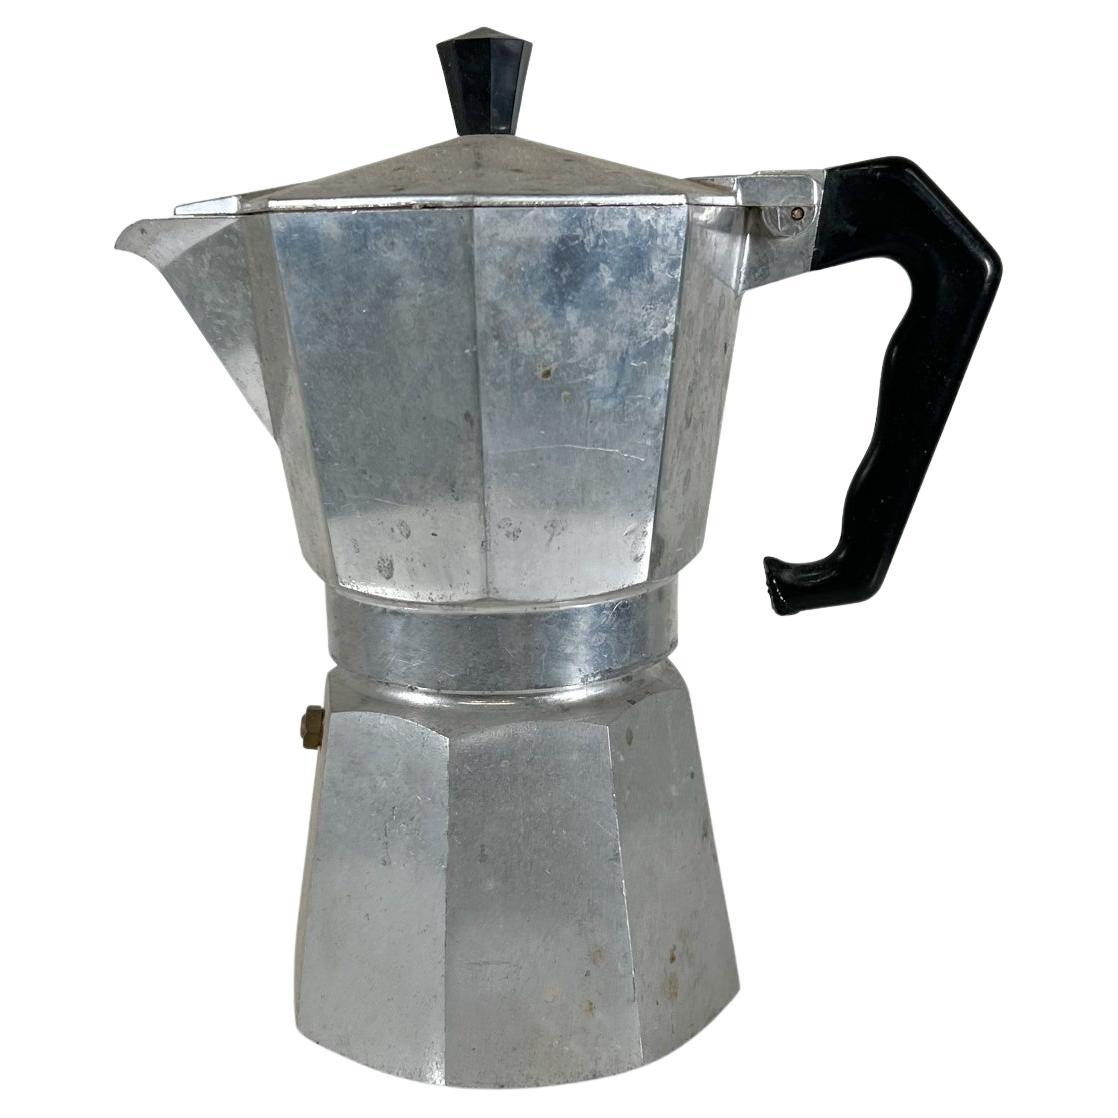 https://a.1stdibscdn.com/1960s-vintage-moka-espresso-coffee-maker-pot-by-morenita-from-italy-for-sale/f_9715/f_322424721673806316592/f_32242472_1673806316865_bg_processed.jpg